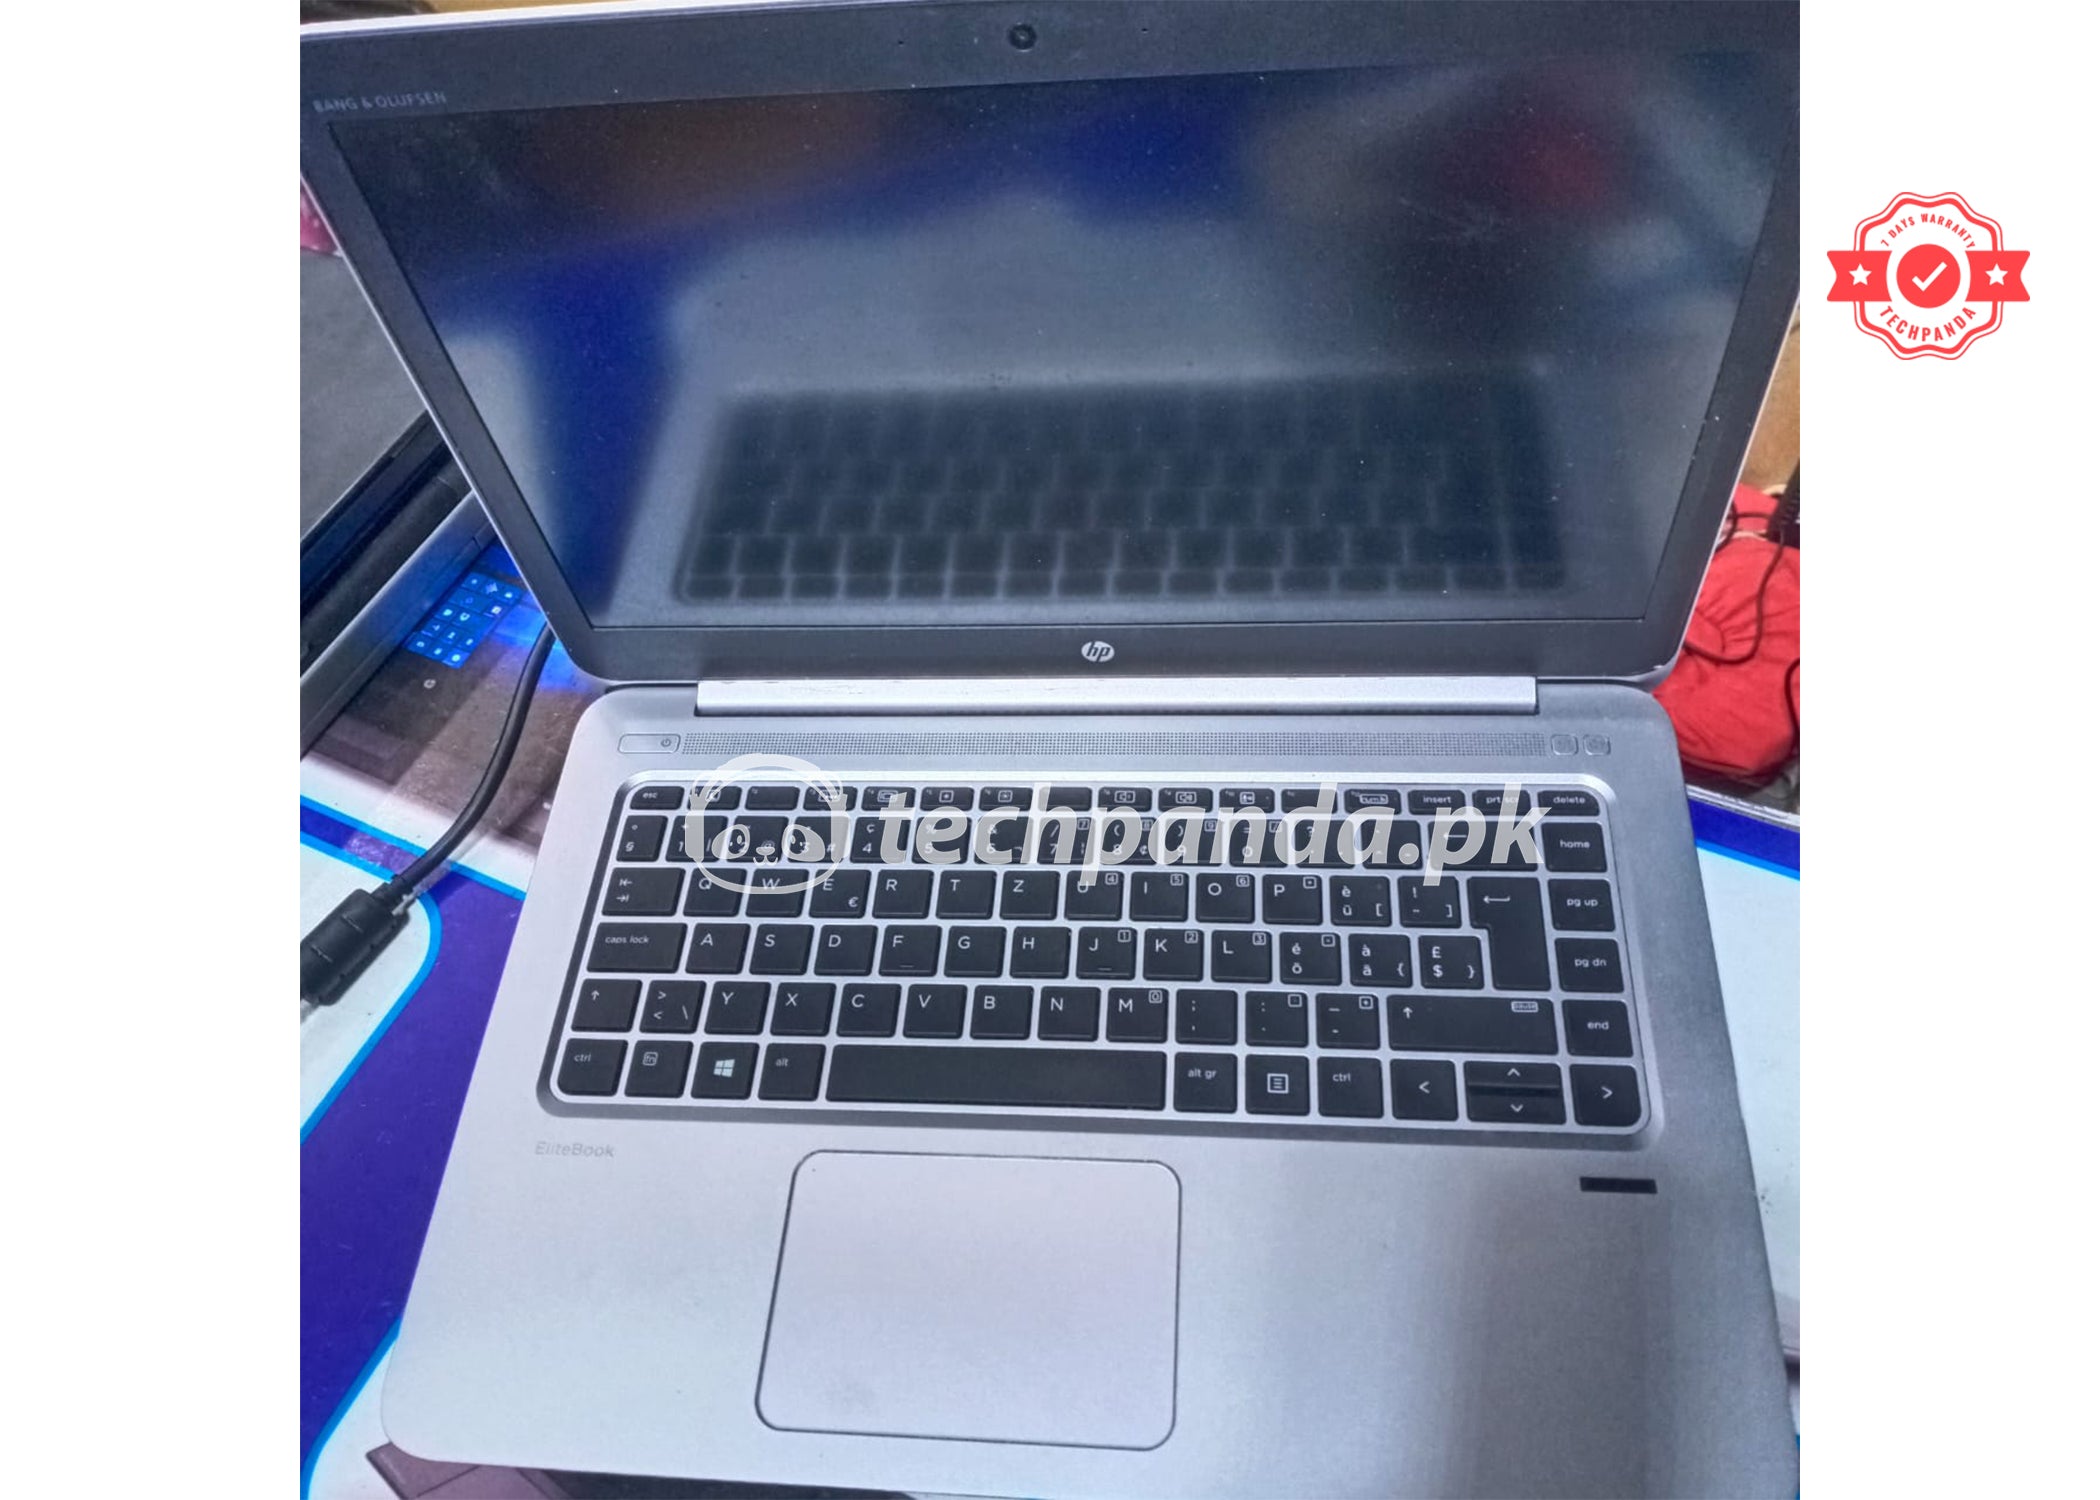 HP EliteBook 820 G4 Core i5 7th Gen, 8GB, 256GB SSD, 12.5″ HD LED (USED)